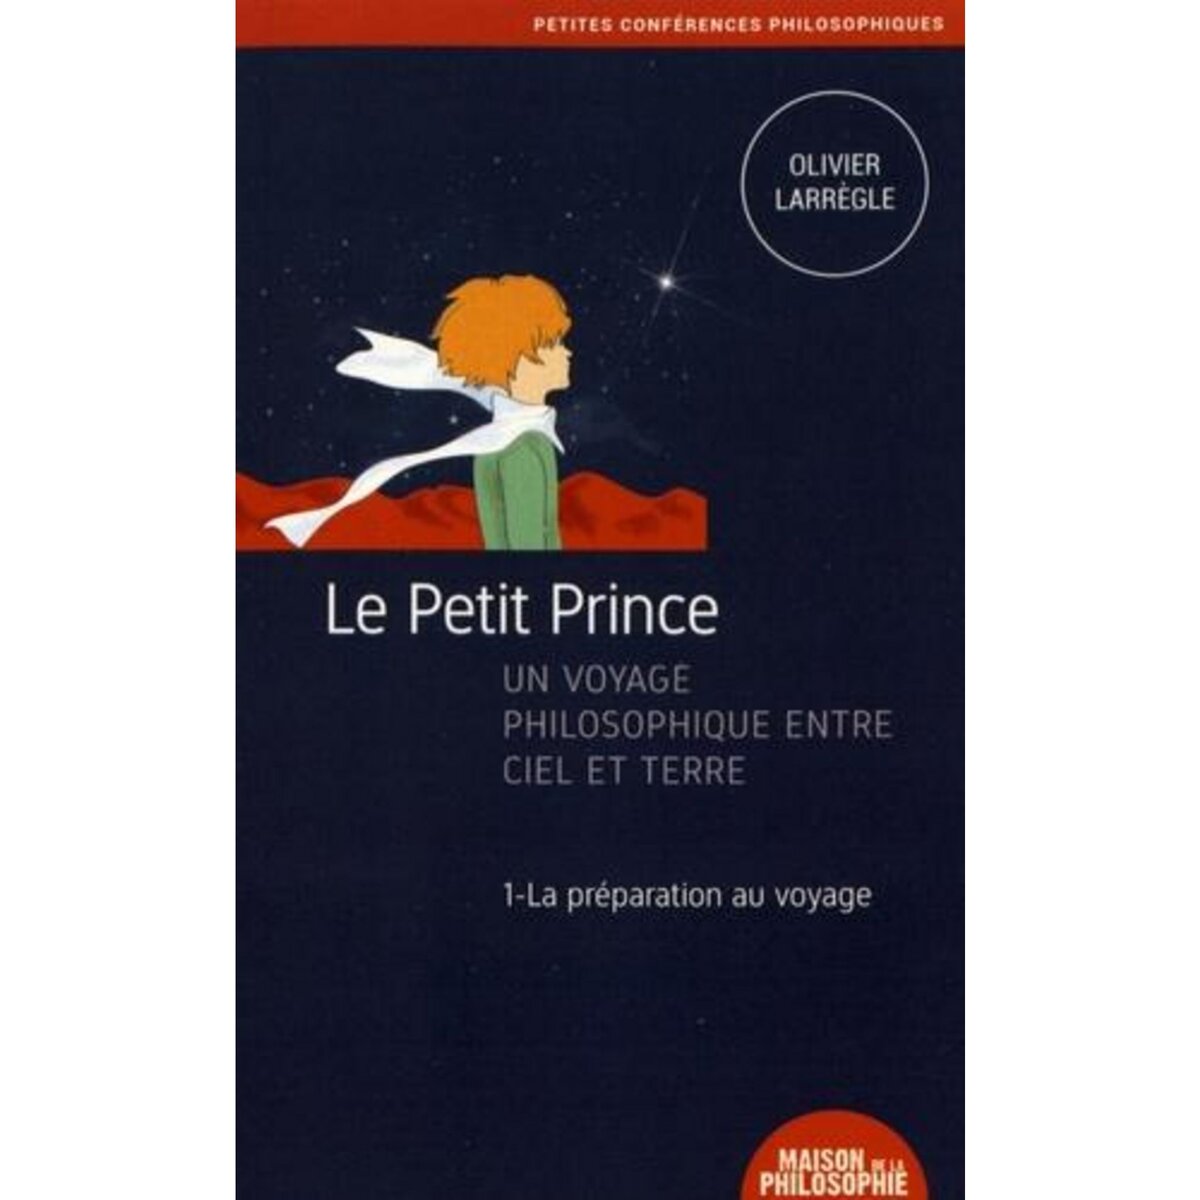 Le Petit Prince - Tome 01